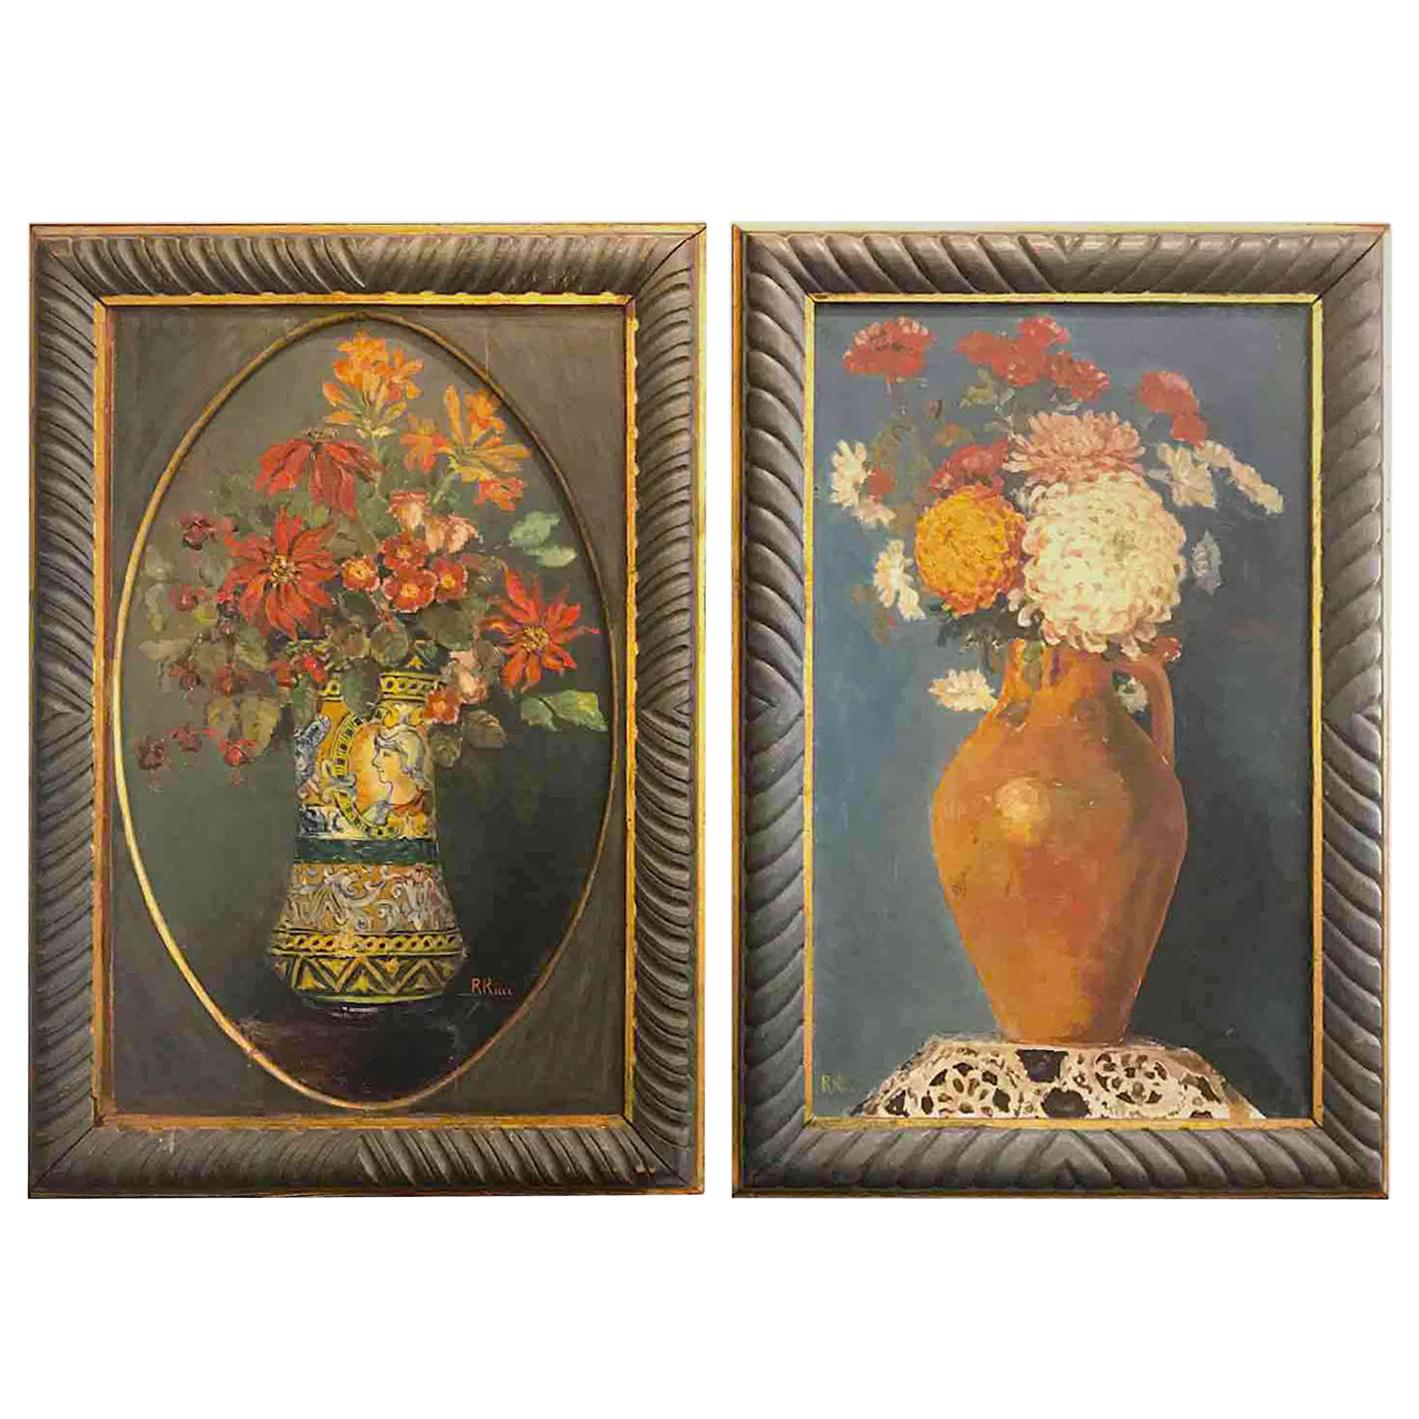 Pair of Italian Flower Still life Paintings by Ricci 20th Century Green Frames